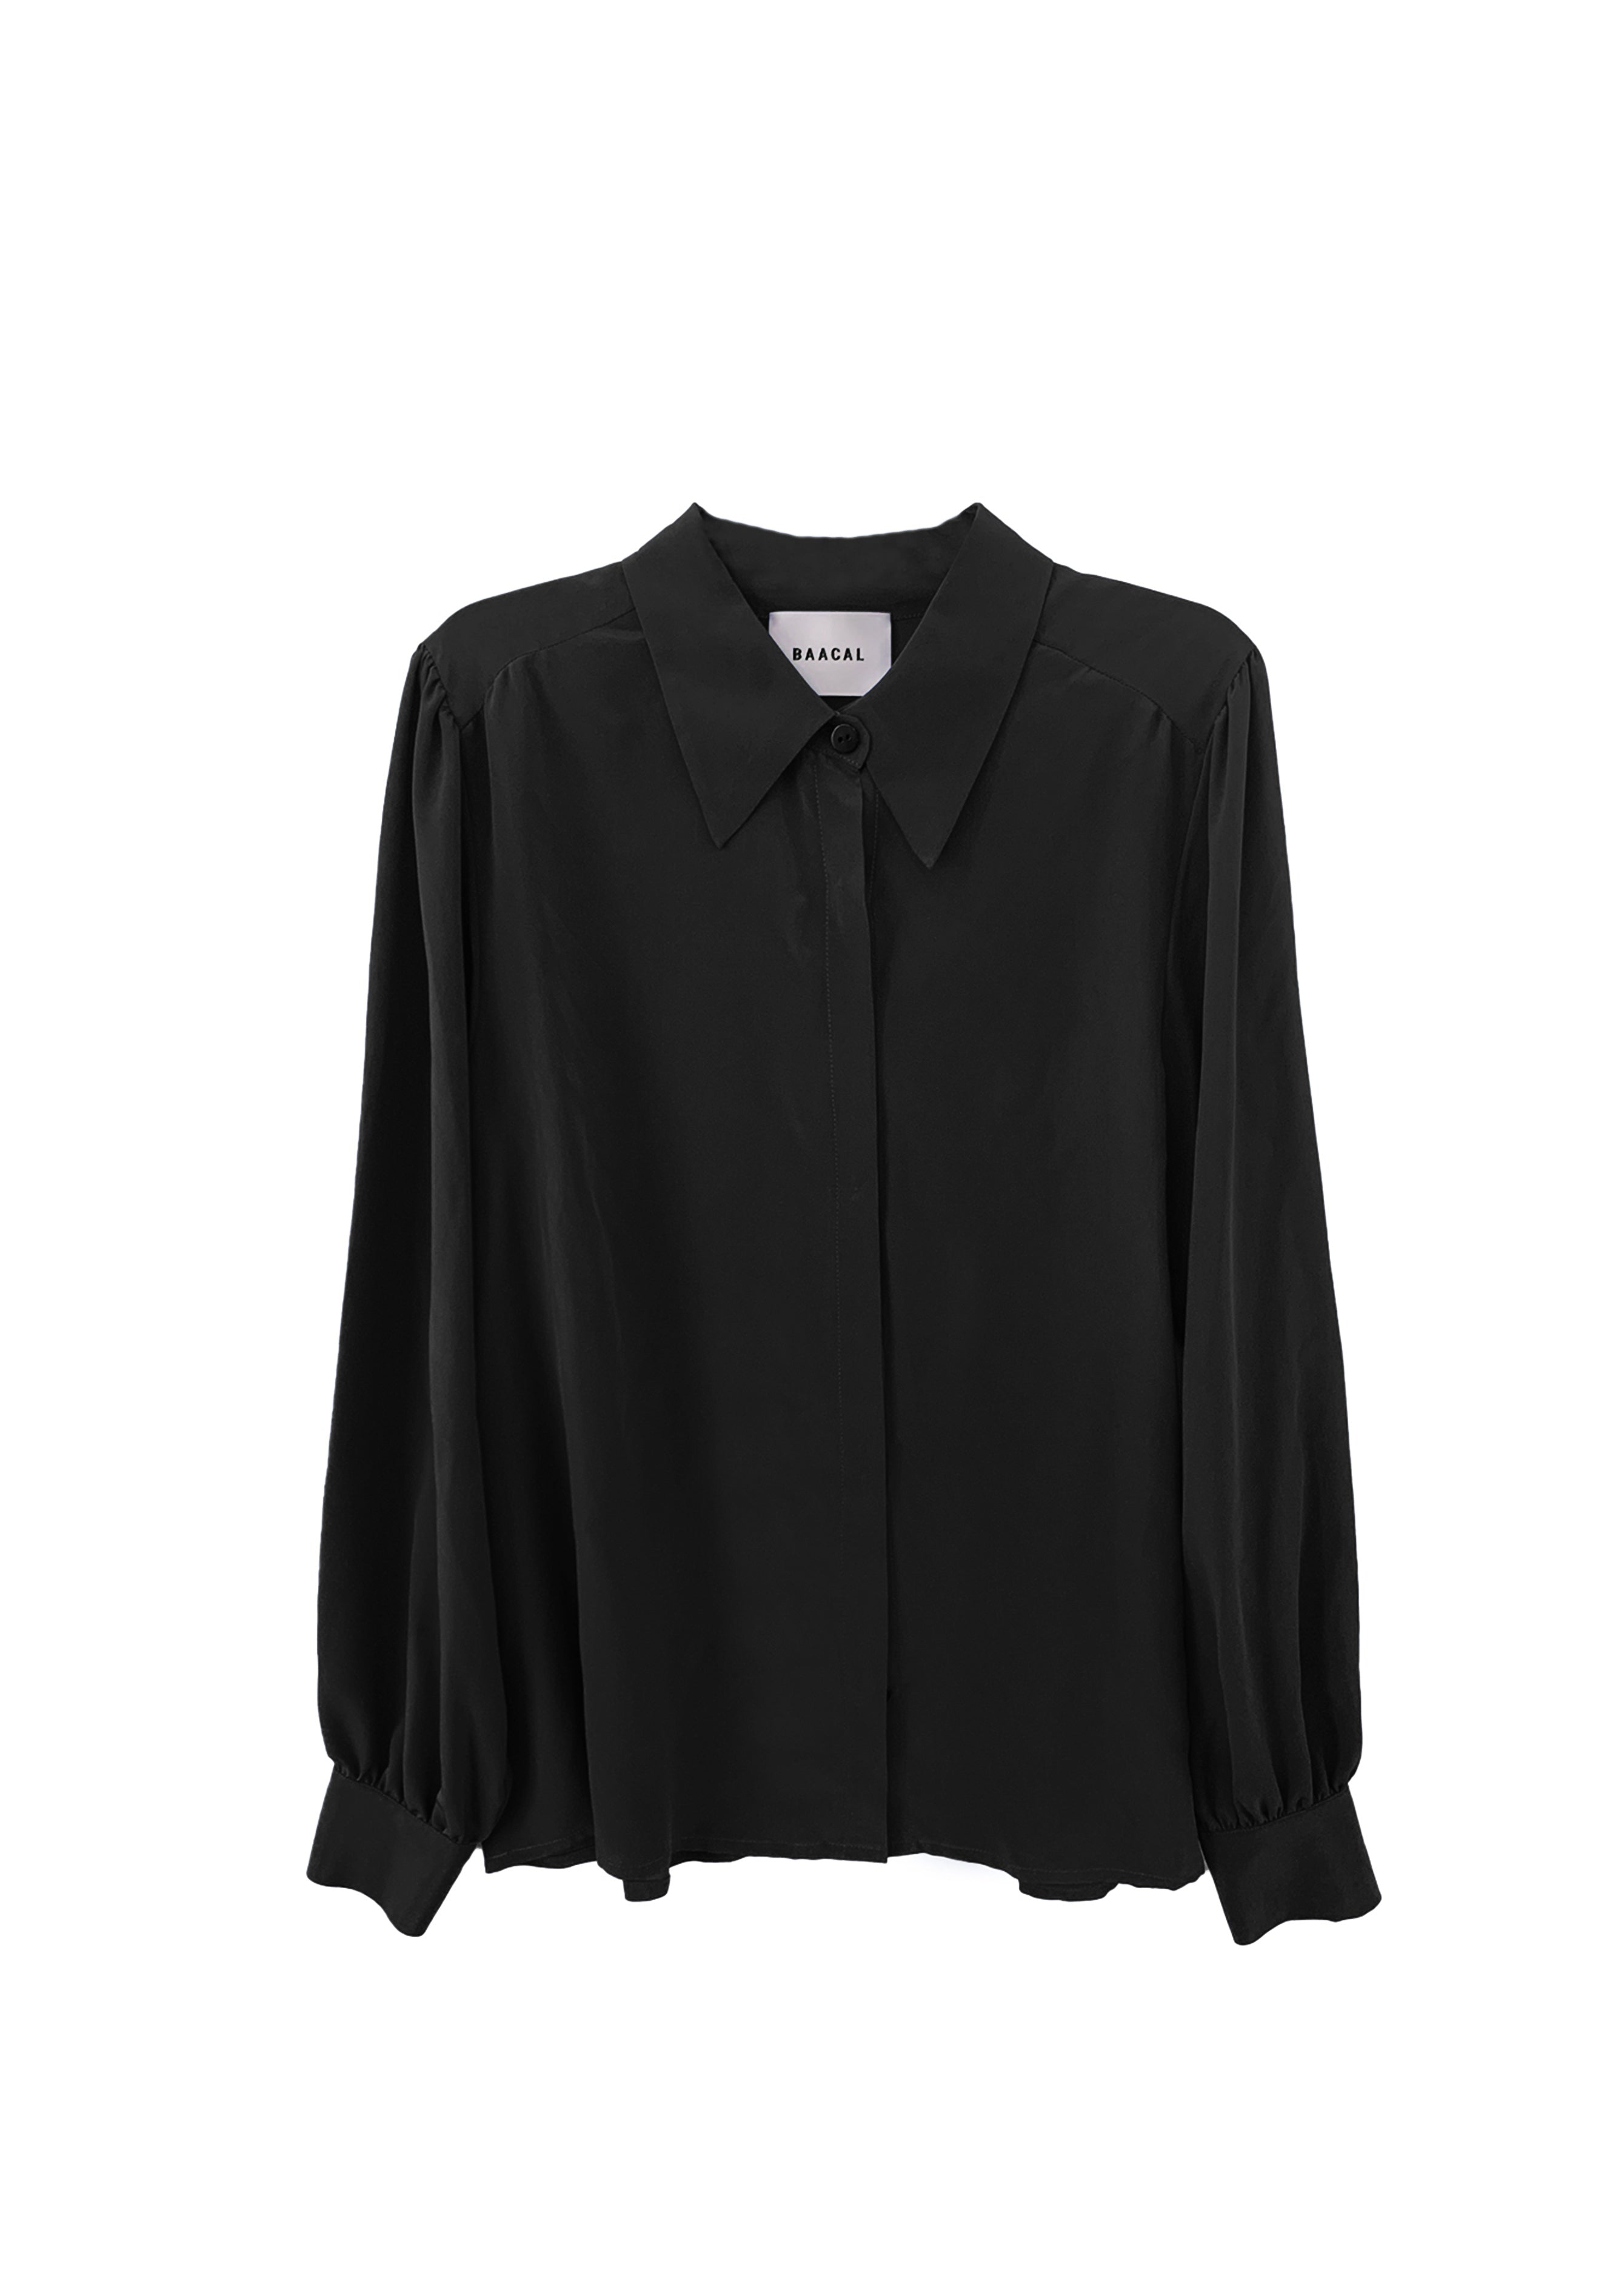 Sigourney Blouse- Black Silk - Designed to fit the "True Size Majority" sizes 10+